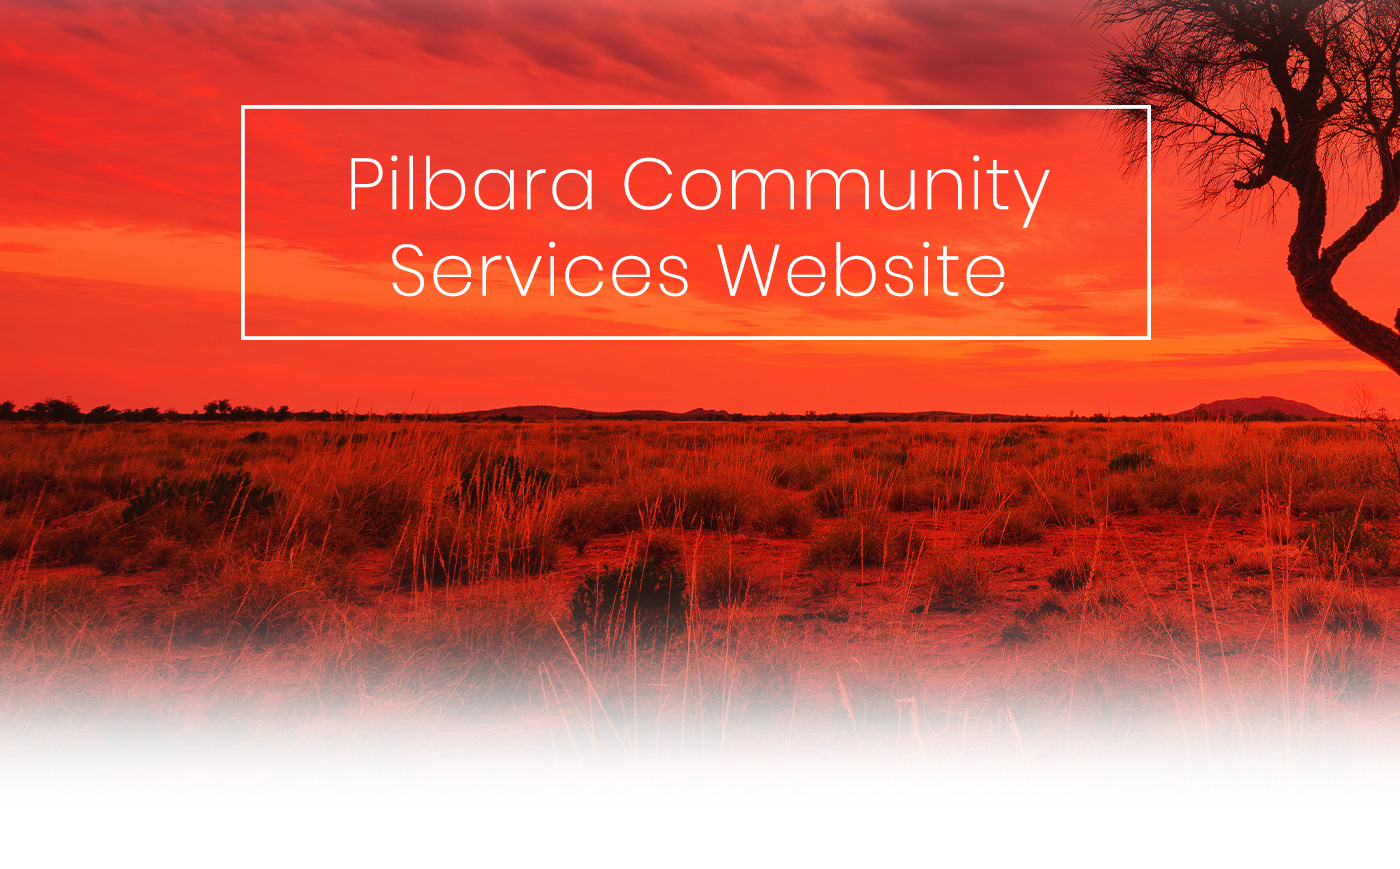 PILBARA COMMUNITY SERVICES WEBSITE